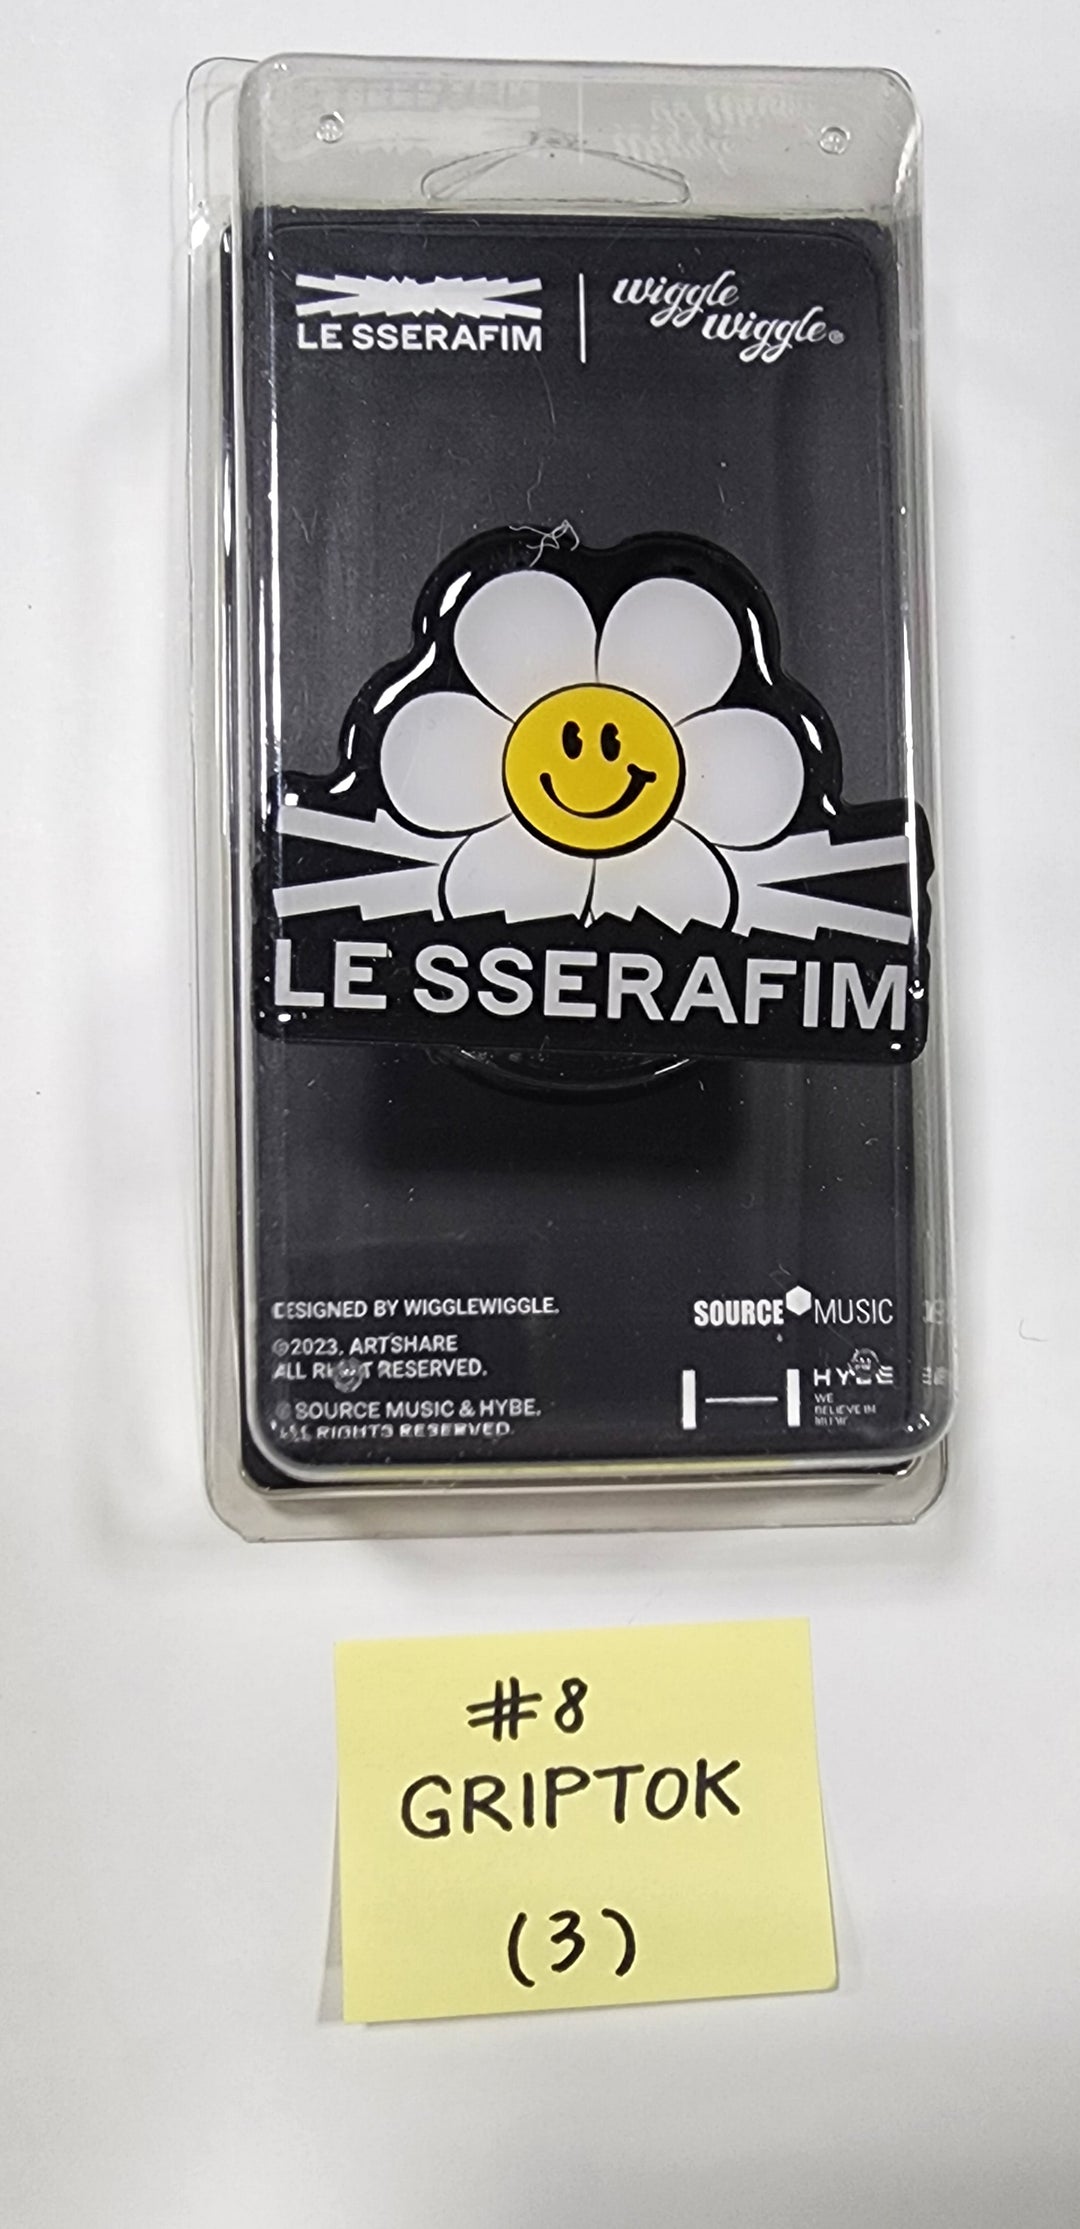 Le Sserafim - 2023 S/S Pop-up Store MD [バッジ、バッグ、フォトカード&amp;缶ケースセット、マスキングテープセット、4カットフォトセット、レンチキュラーフォトセット、ライトスティック] [8/7再入荷]